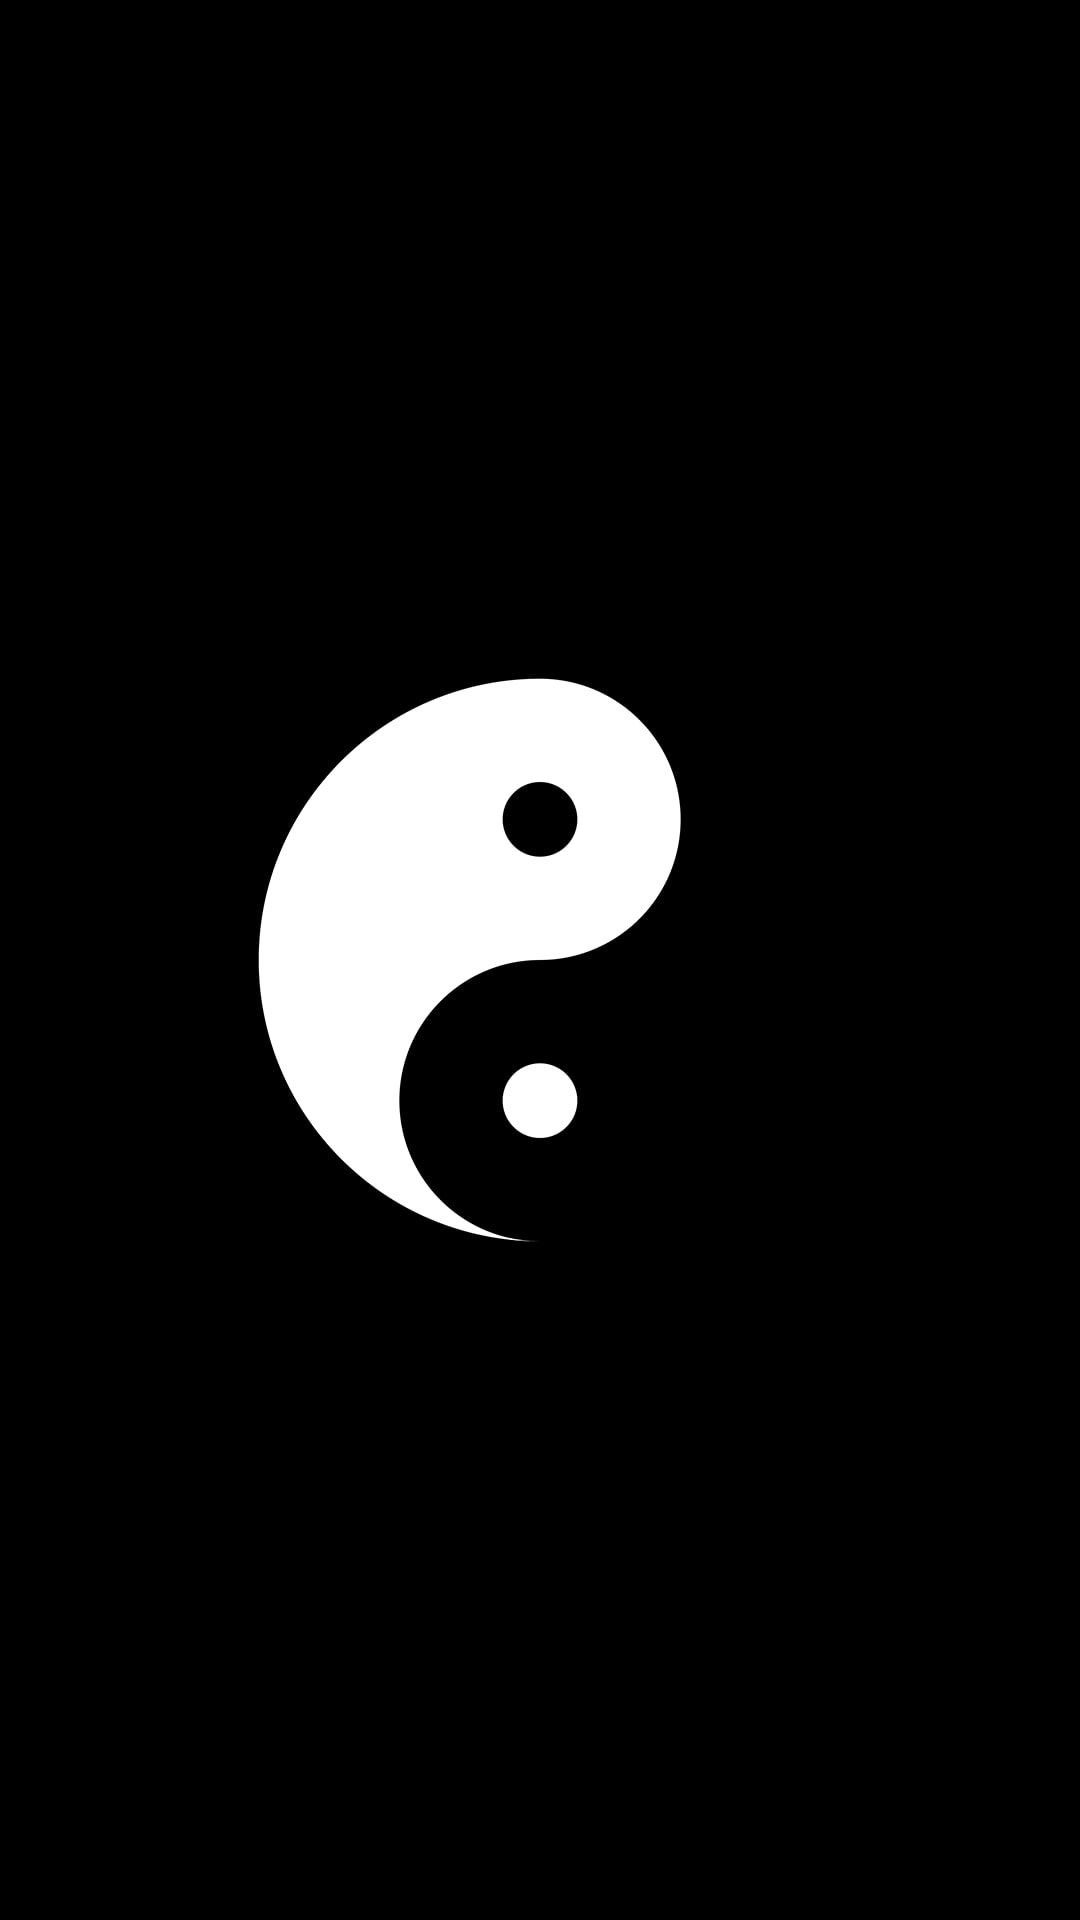 black background #minimalism Yin and Yang portrait display. iPhone fondos de pantalla, Fondo de pantalla negro para iphone, Fondo de pantalla para el teléfono